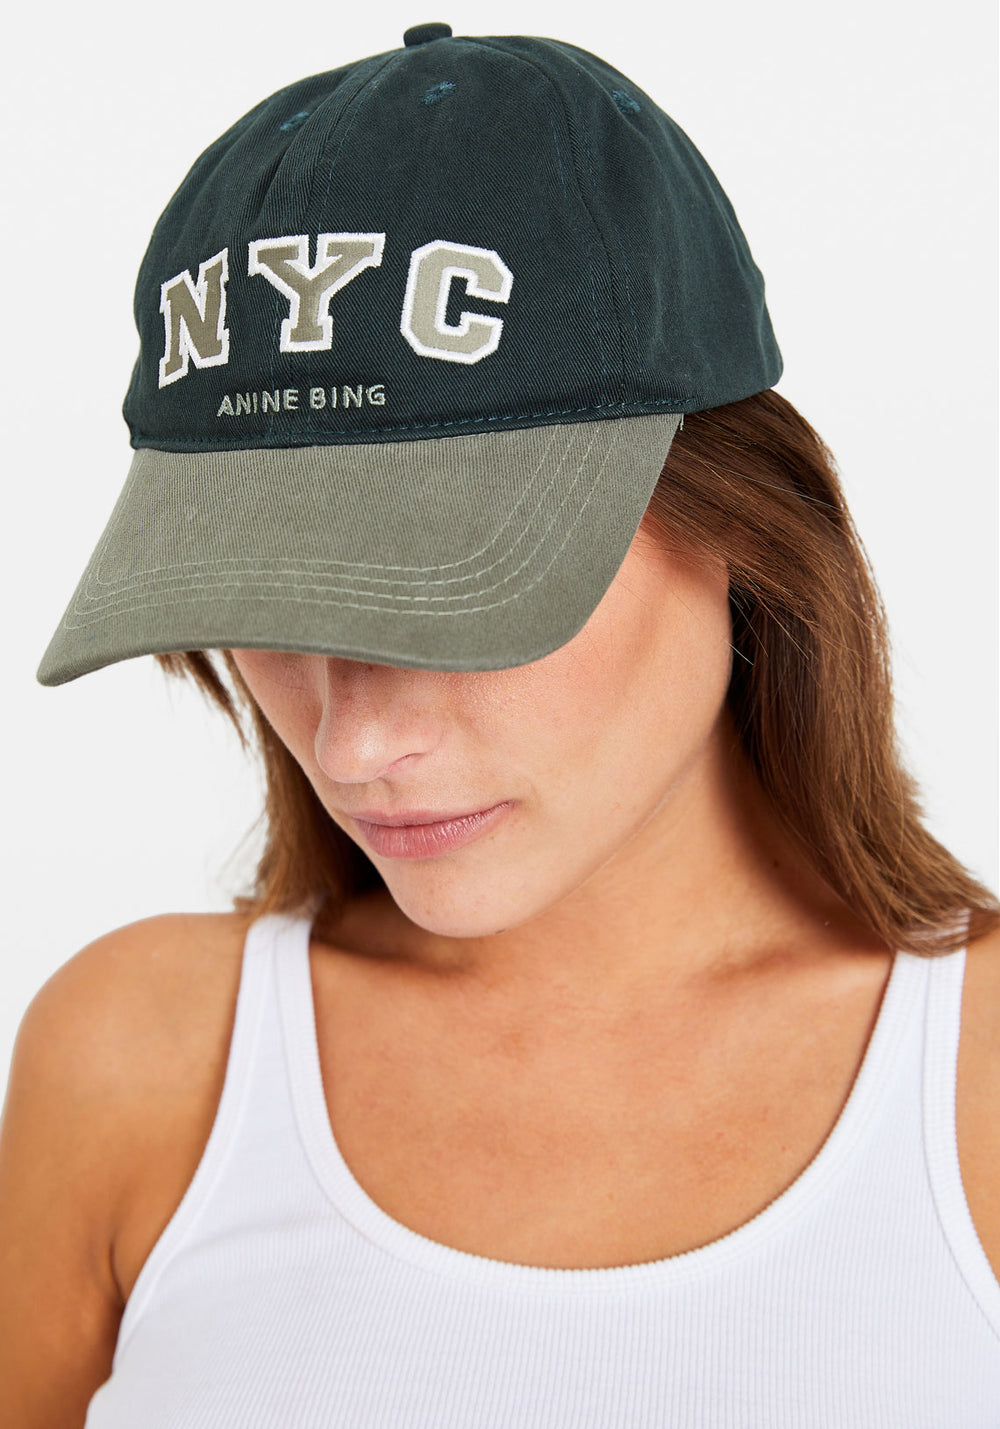 JEREMY BASEBALL CAP NYC CHARCOAL GREEN, Anine Bing